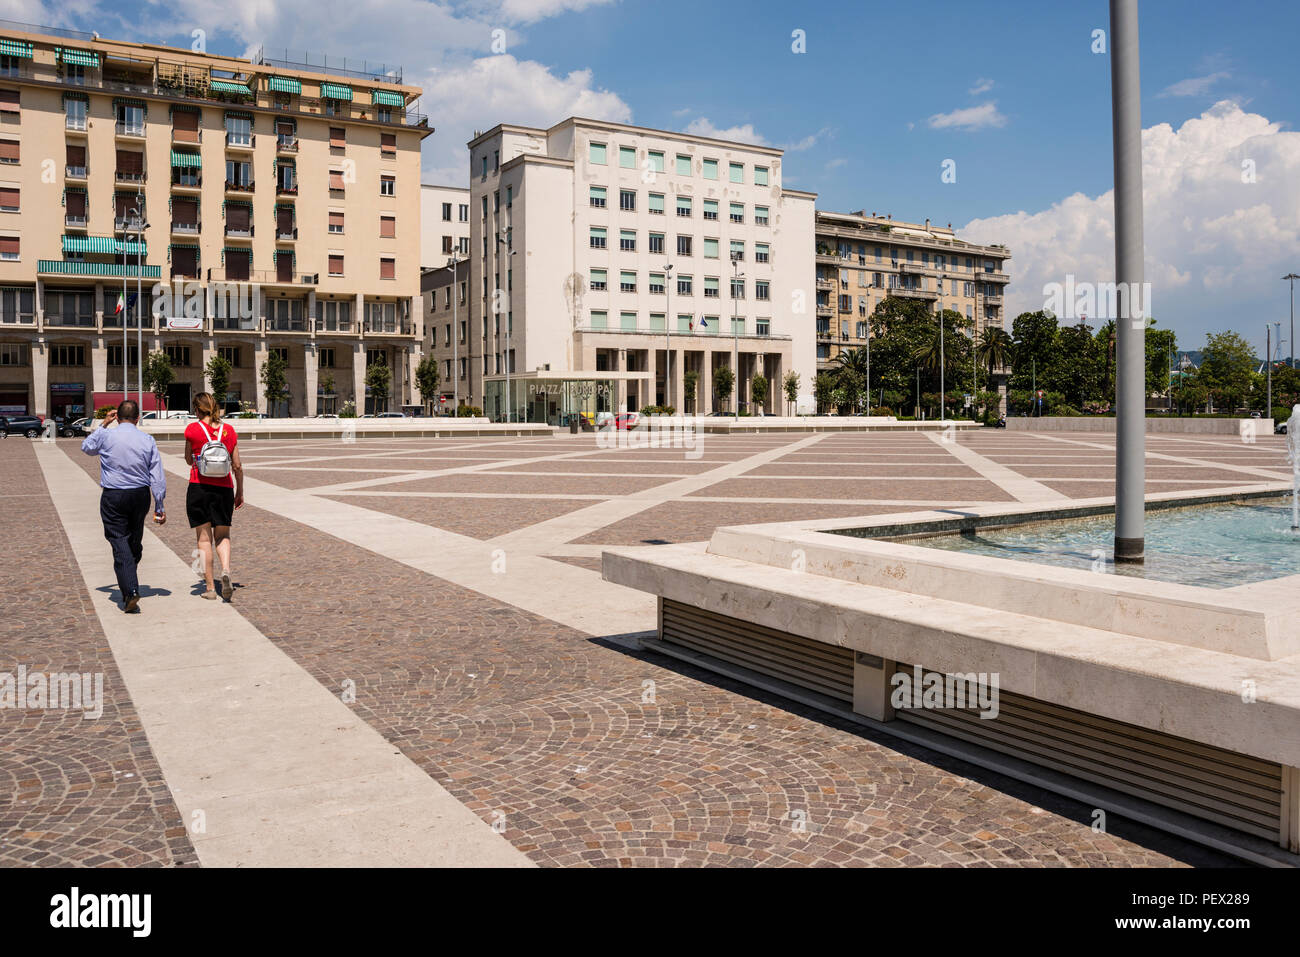 Europa Plaza, plaza pública recién construido, La Spezia, Liguria, Italia Foto de stock